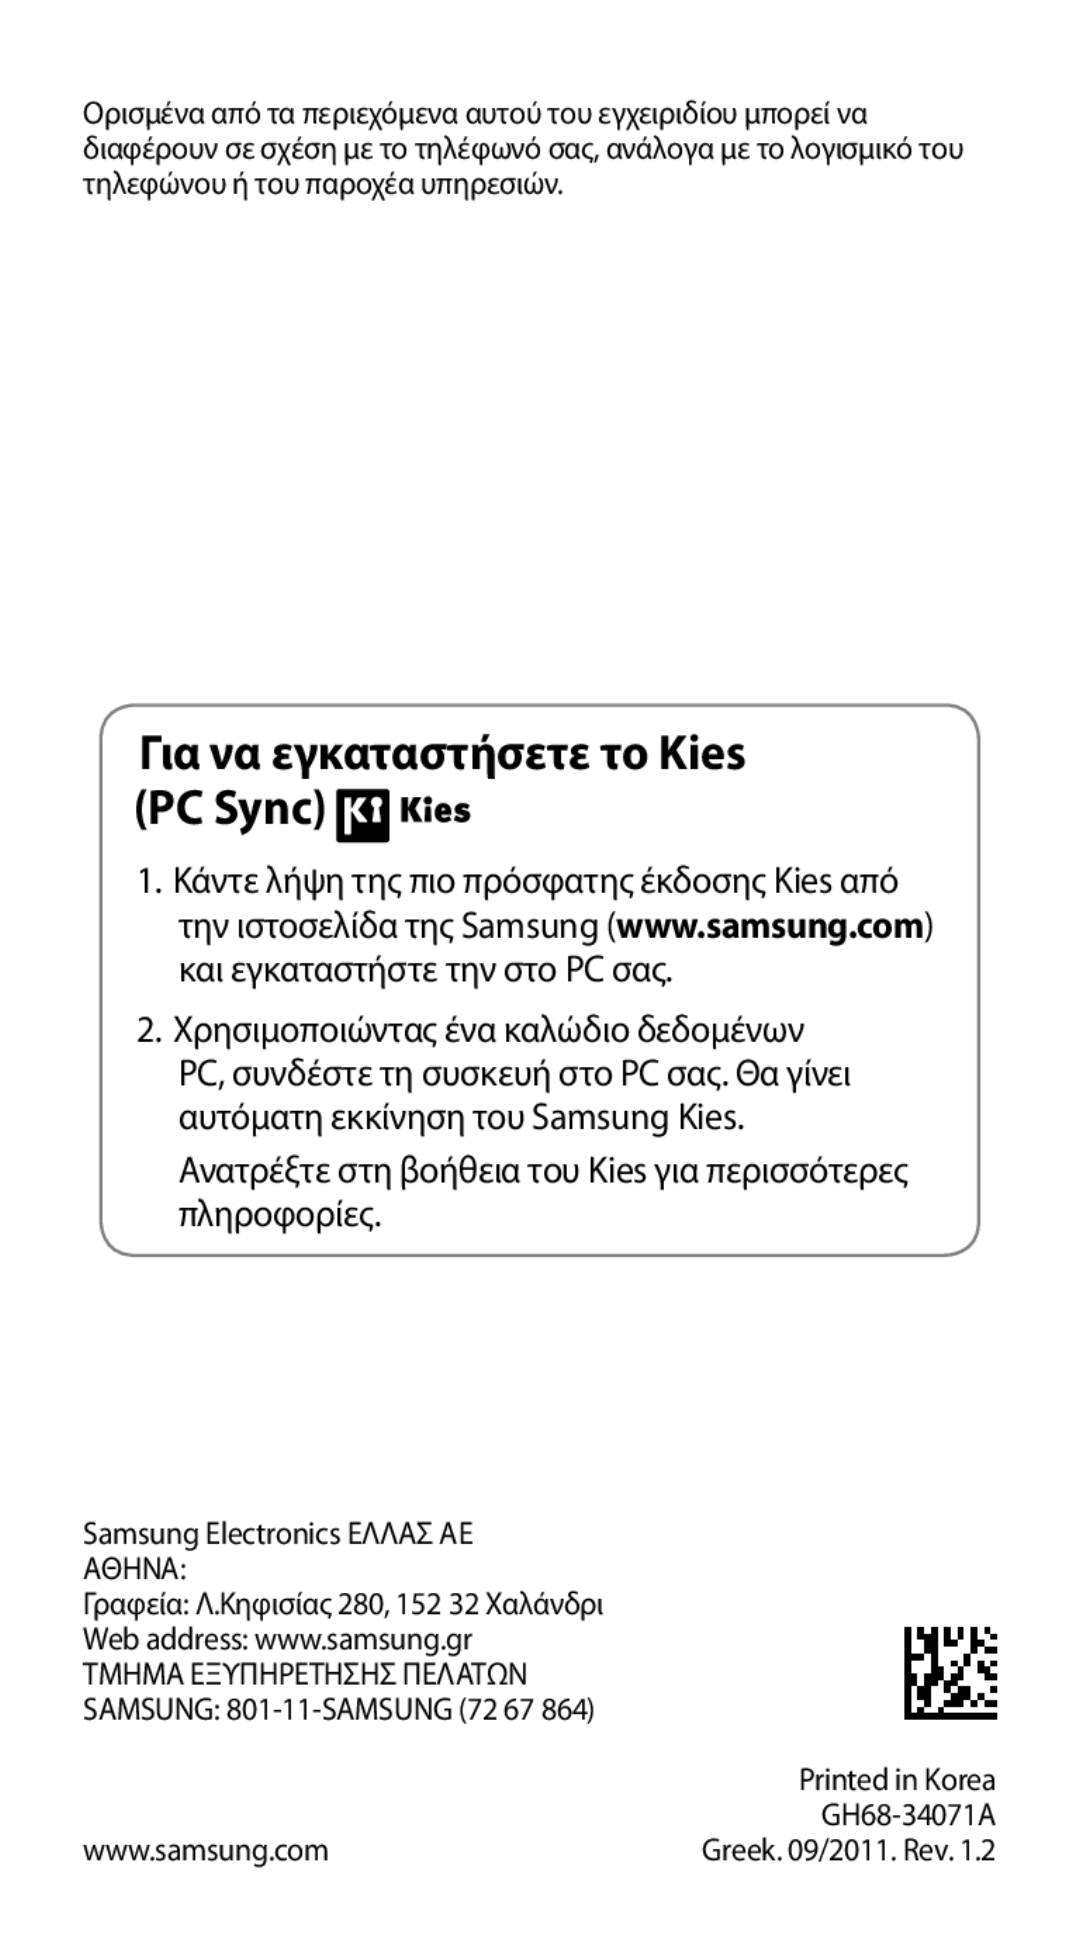 Samsung GT-I9100LKACYO Για να εγκαταστήσετε το Kies PC Sync, Ανατρέξτε στη βοήθεια του Kies για περισσότερες πληροφορίες 